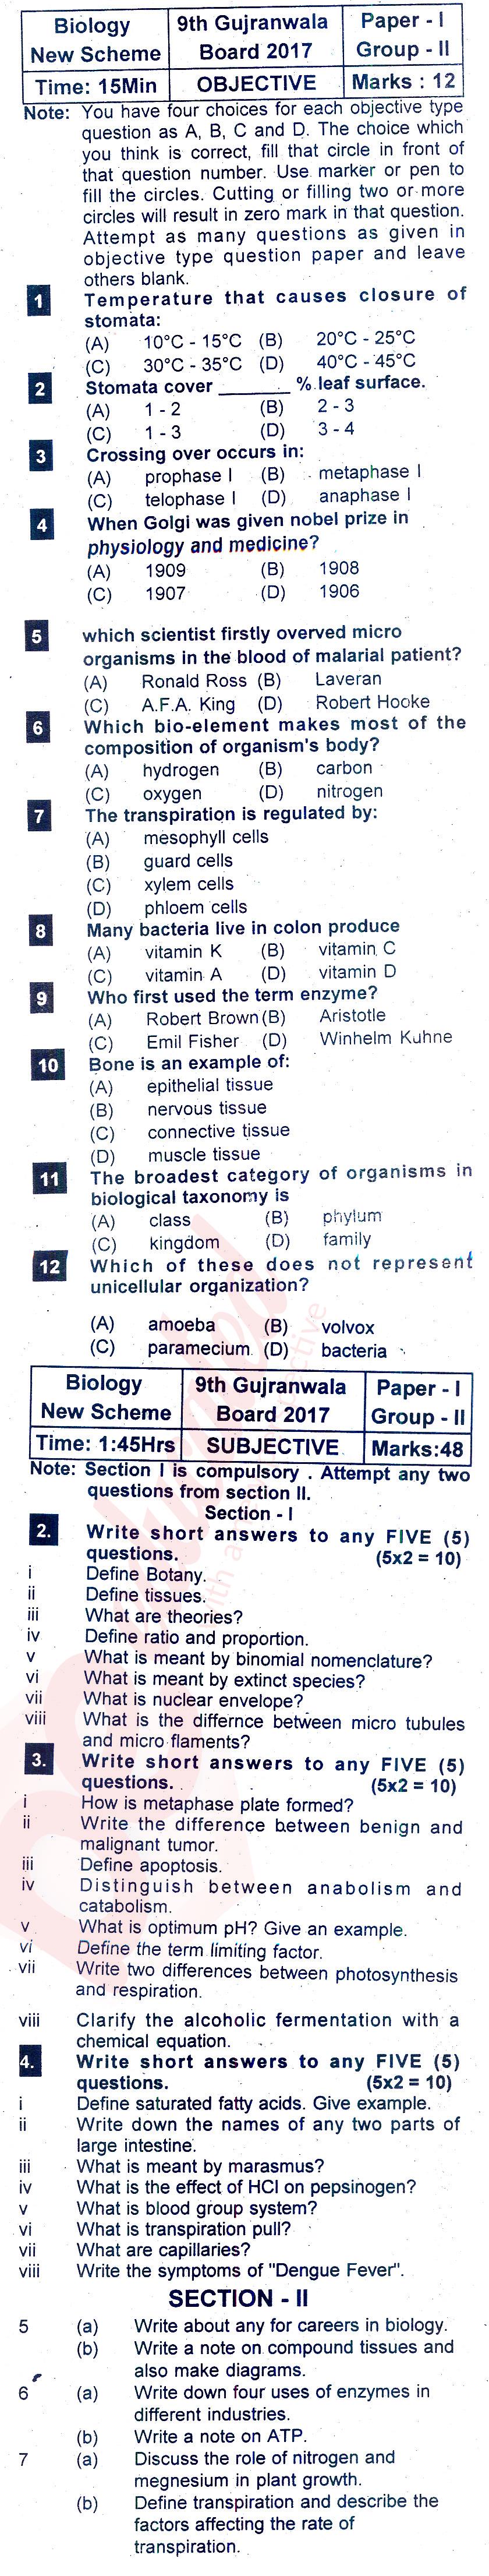 Biology 9th English Medium Past Paper Group 2 BISE Gujranwala 2017